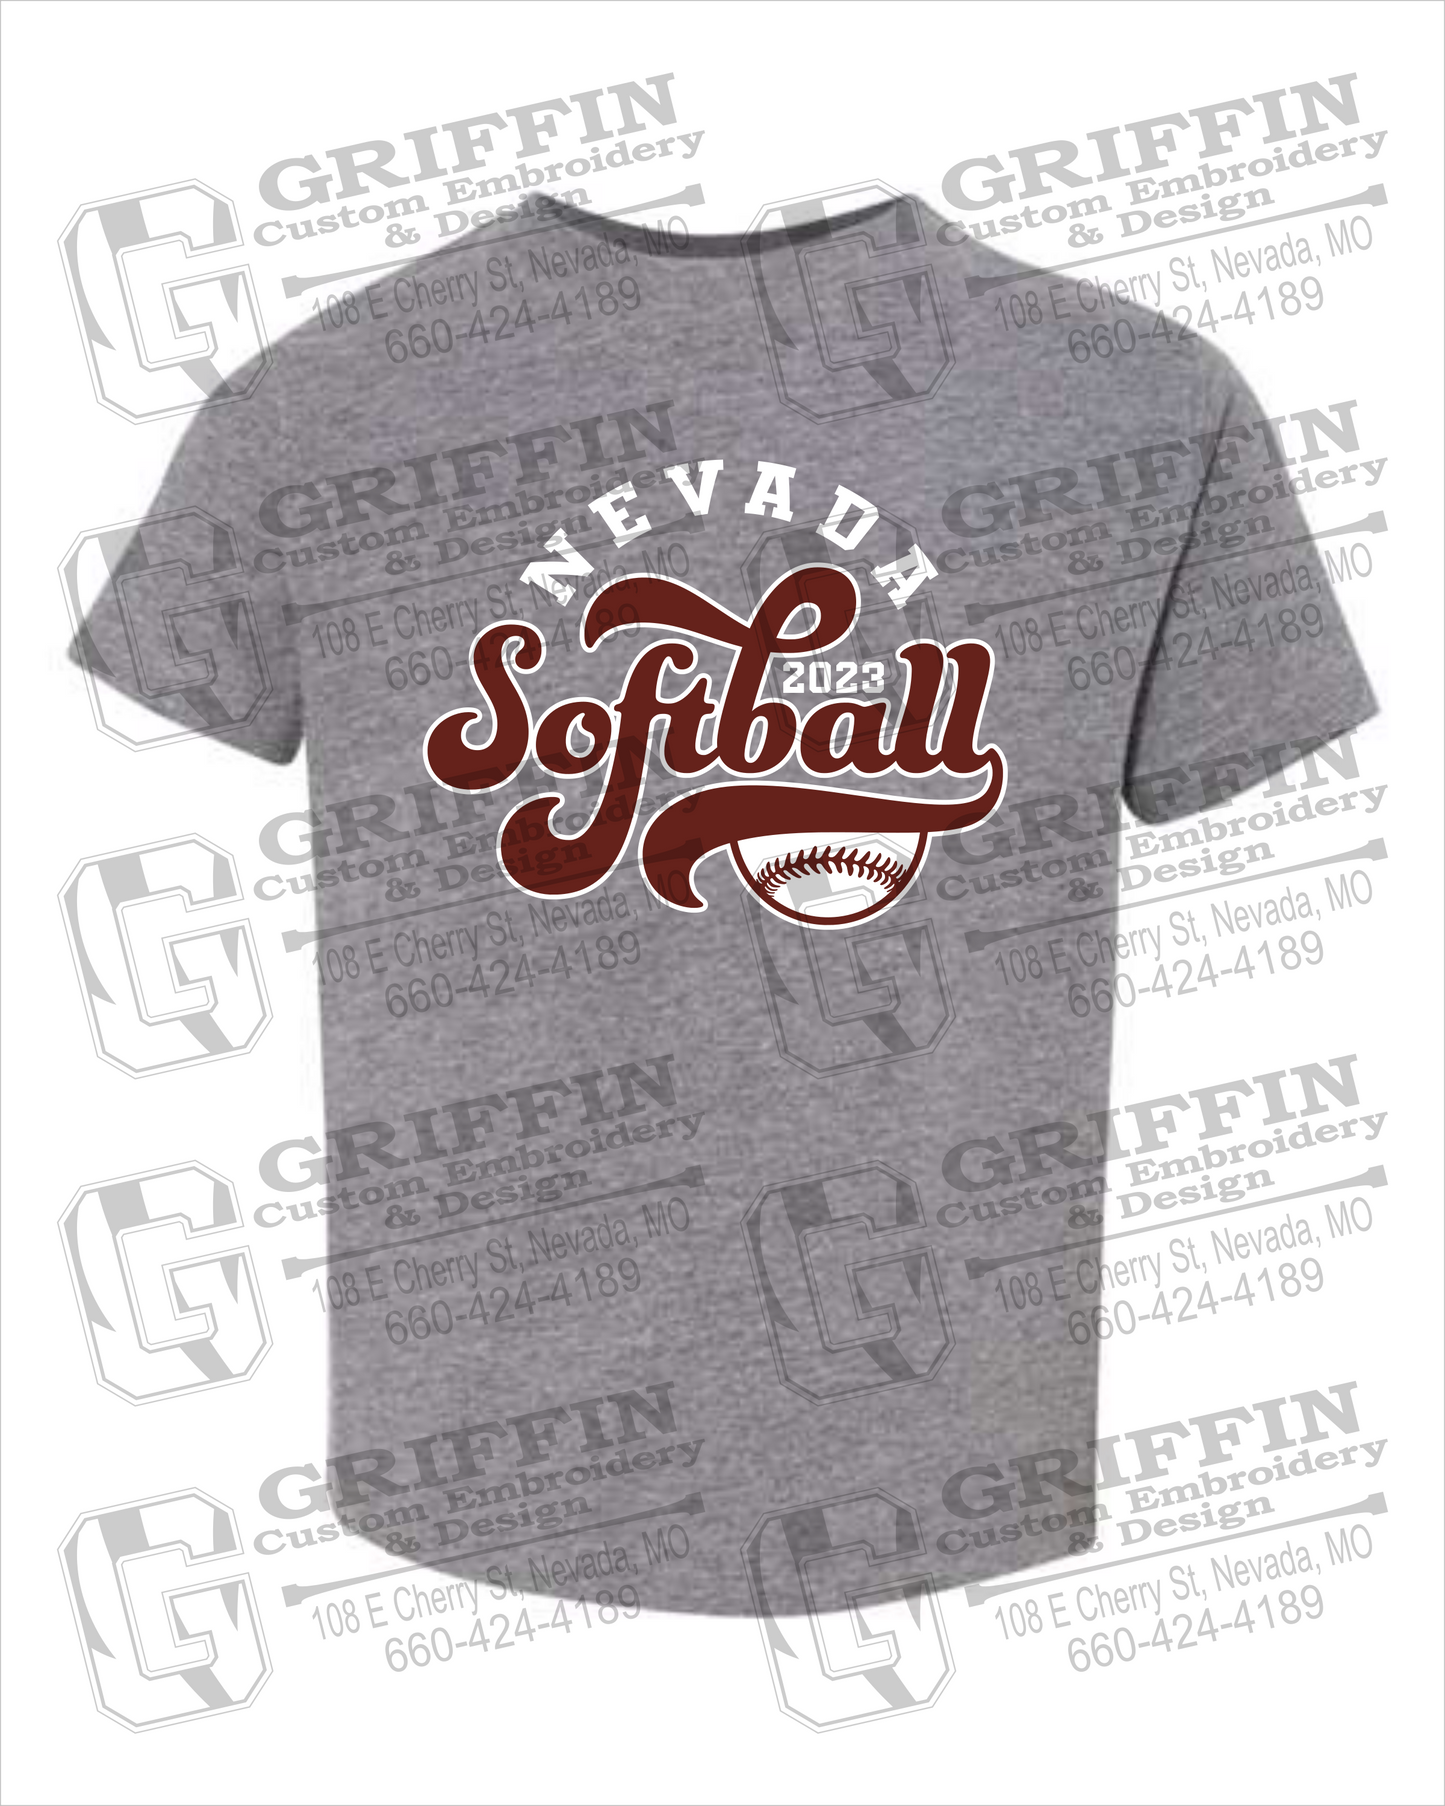 Nevada Tigers 24-D Toddler/Infant T-Shirt - Softball